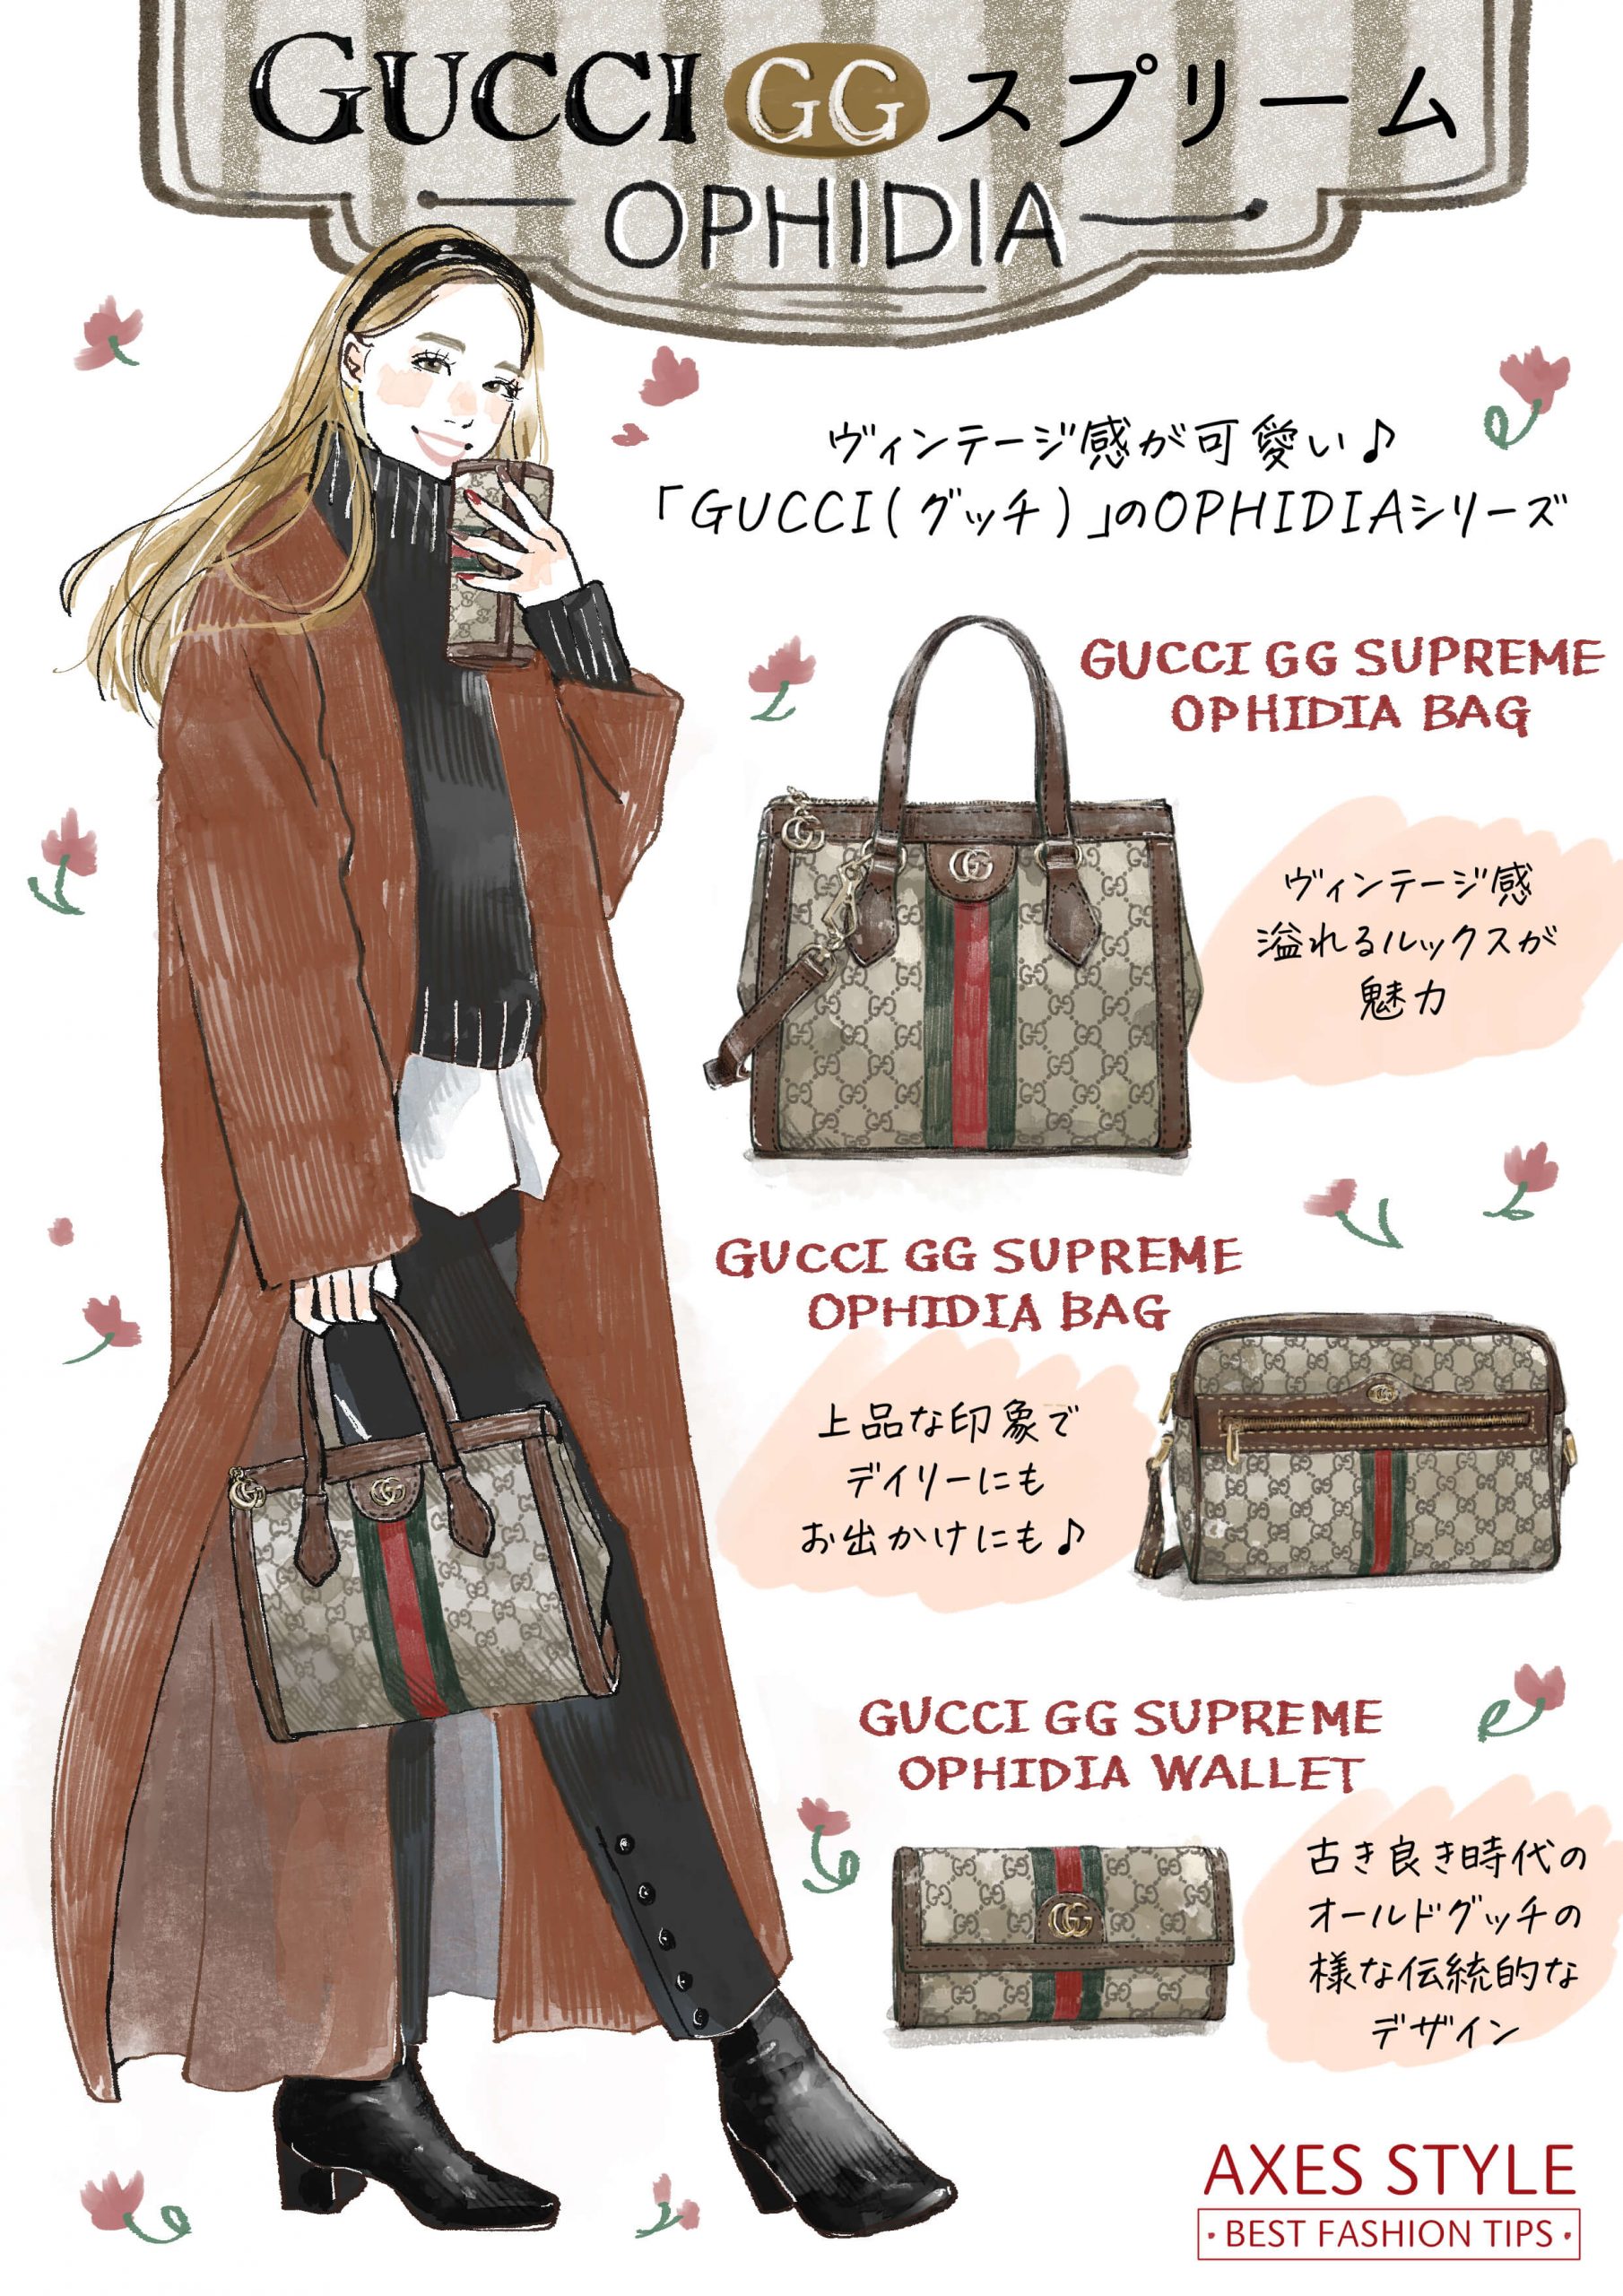 Axes Style Vol 28 ヴィンテージ感が可愛い Gucci グッチ のophidiaシリーズ